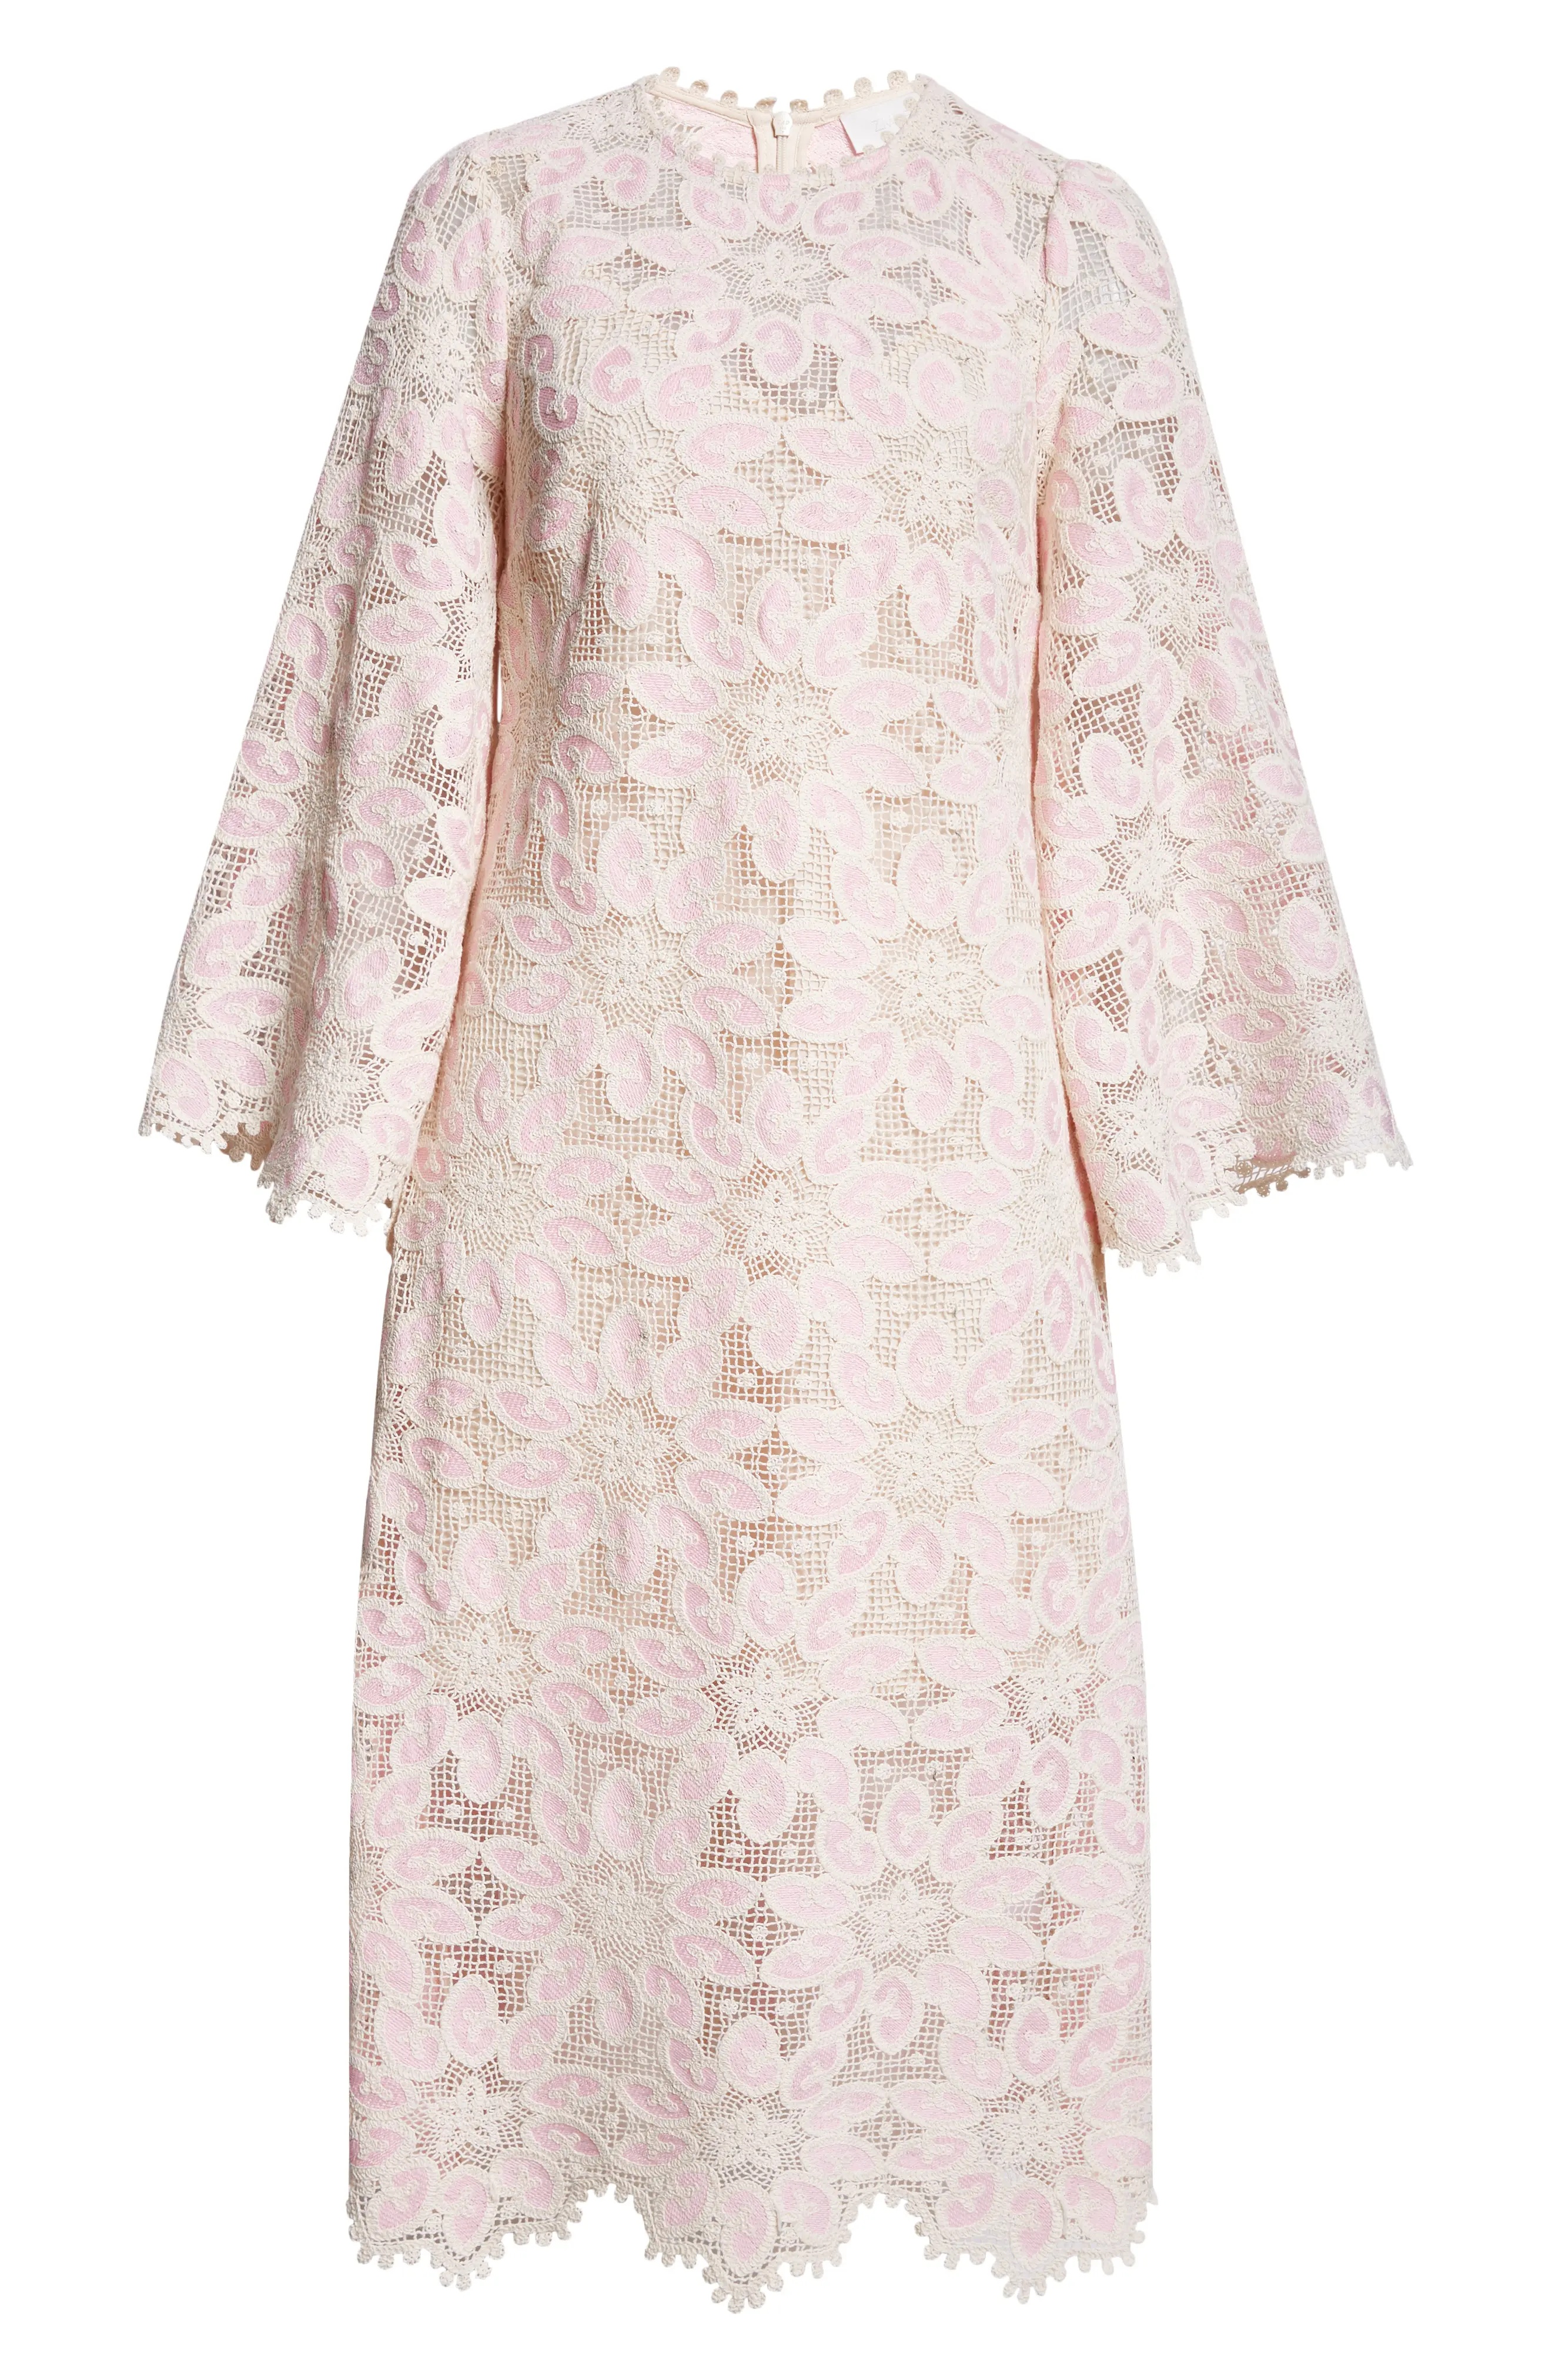 Ottie Long Sleeve Guipure Lace Cotton Blend Midi Dress in Cream/Pink - 5